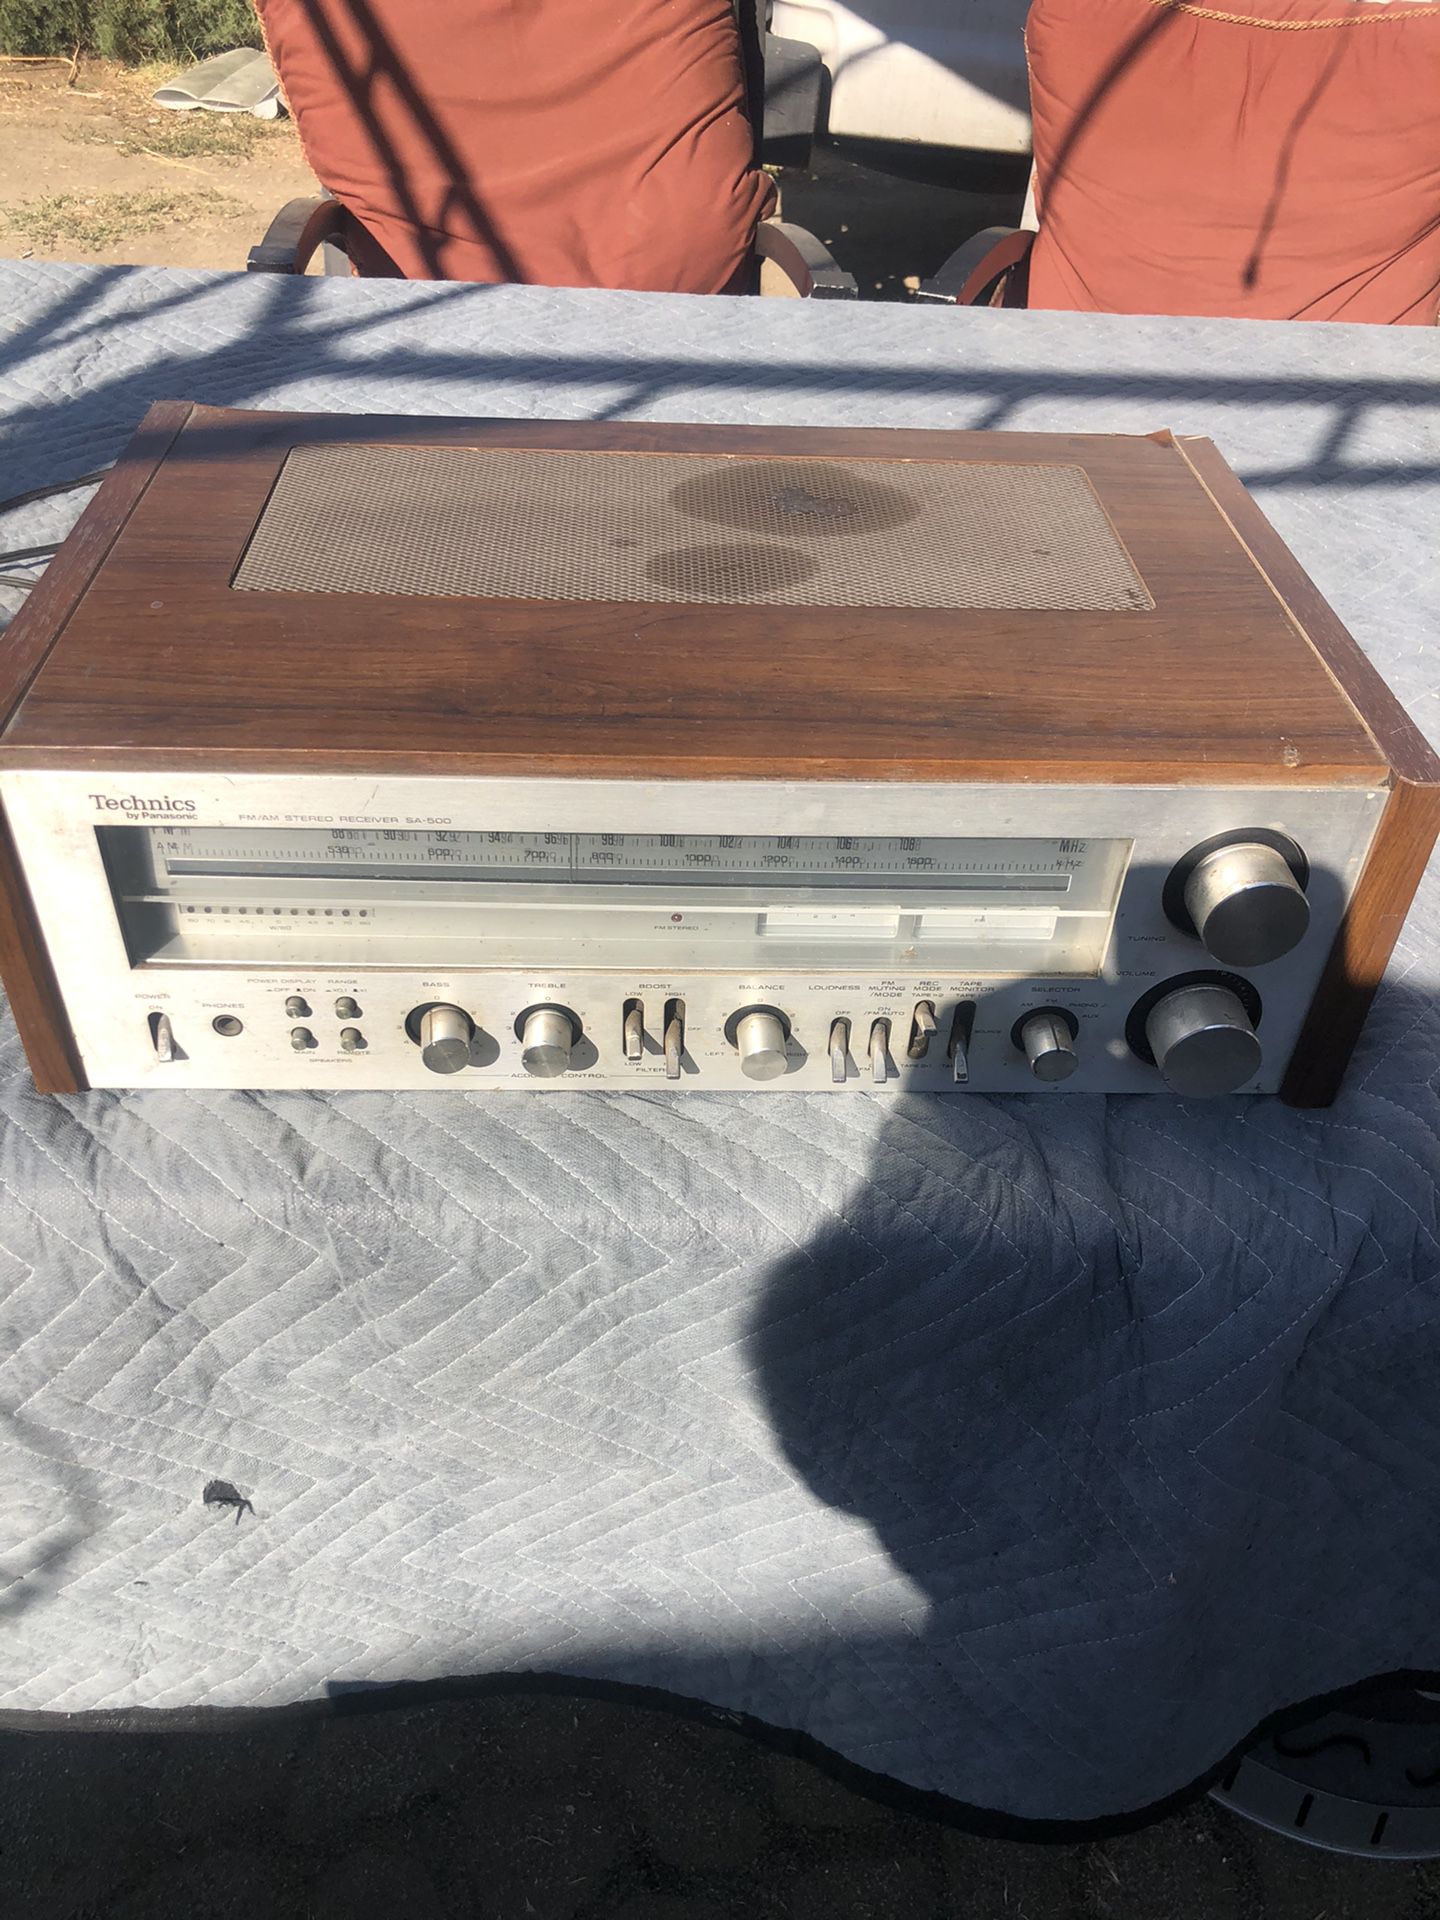 Technics SA 500 stereo receiver